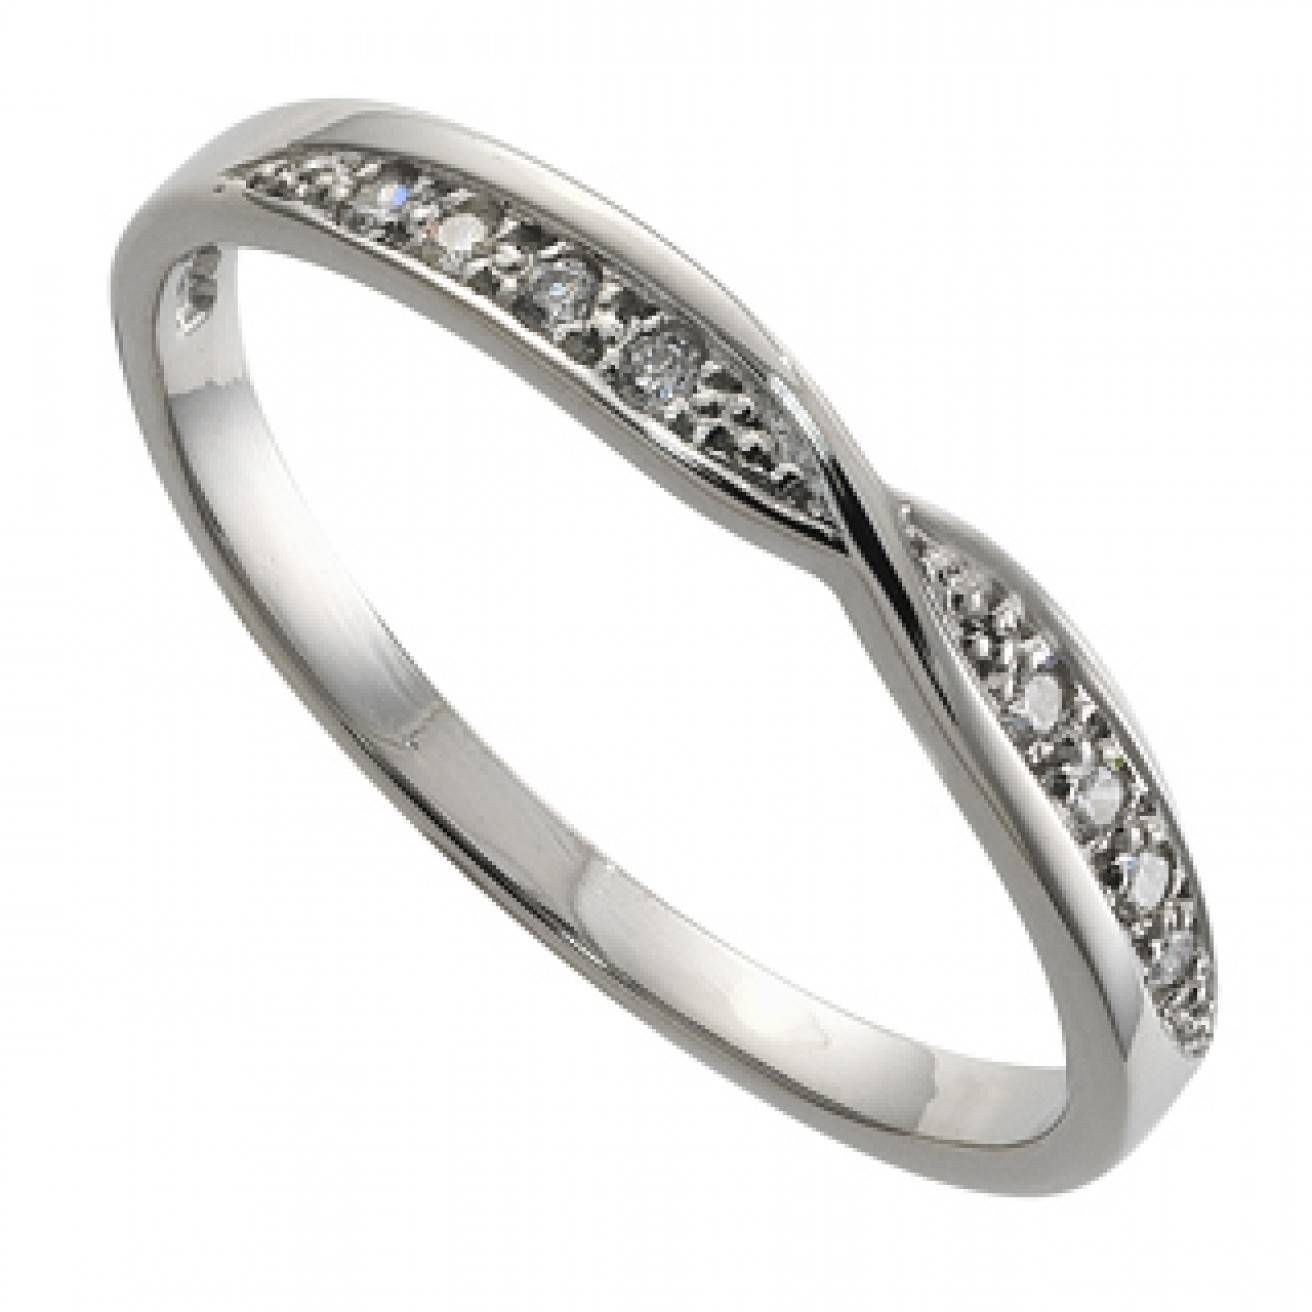 Buy Platinum Wedding Bands Online – Fraser Hart Inside Diamond And Platinum Wedding Rings (View 4 of 15)